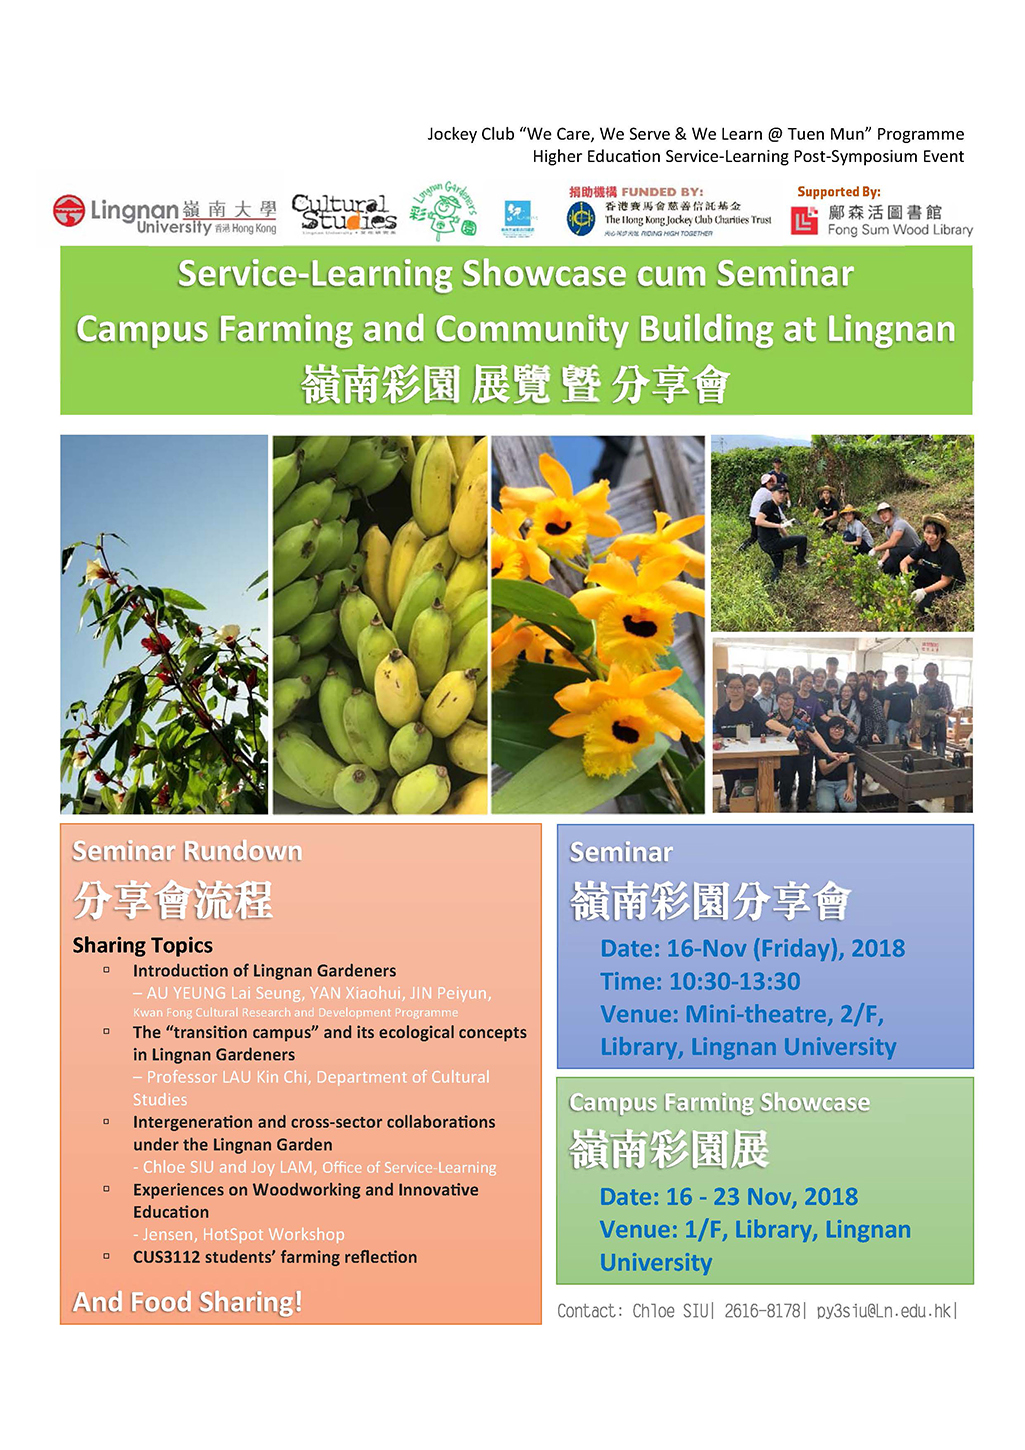 Seminar Service-learning showcase cum seminar — campus farming and community building at Lingnan